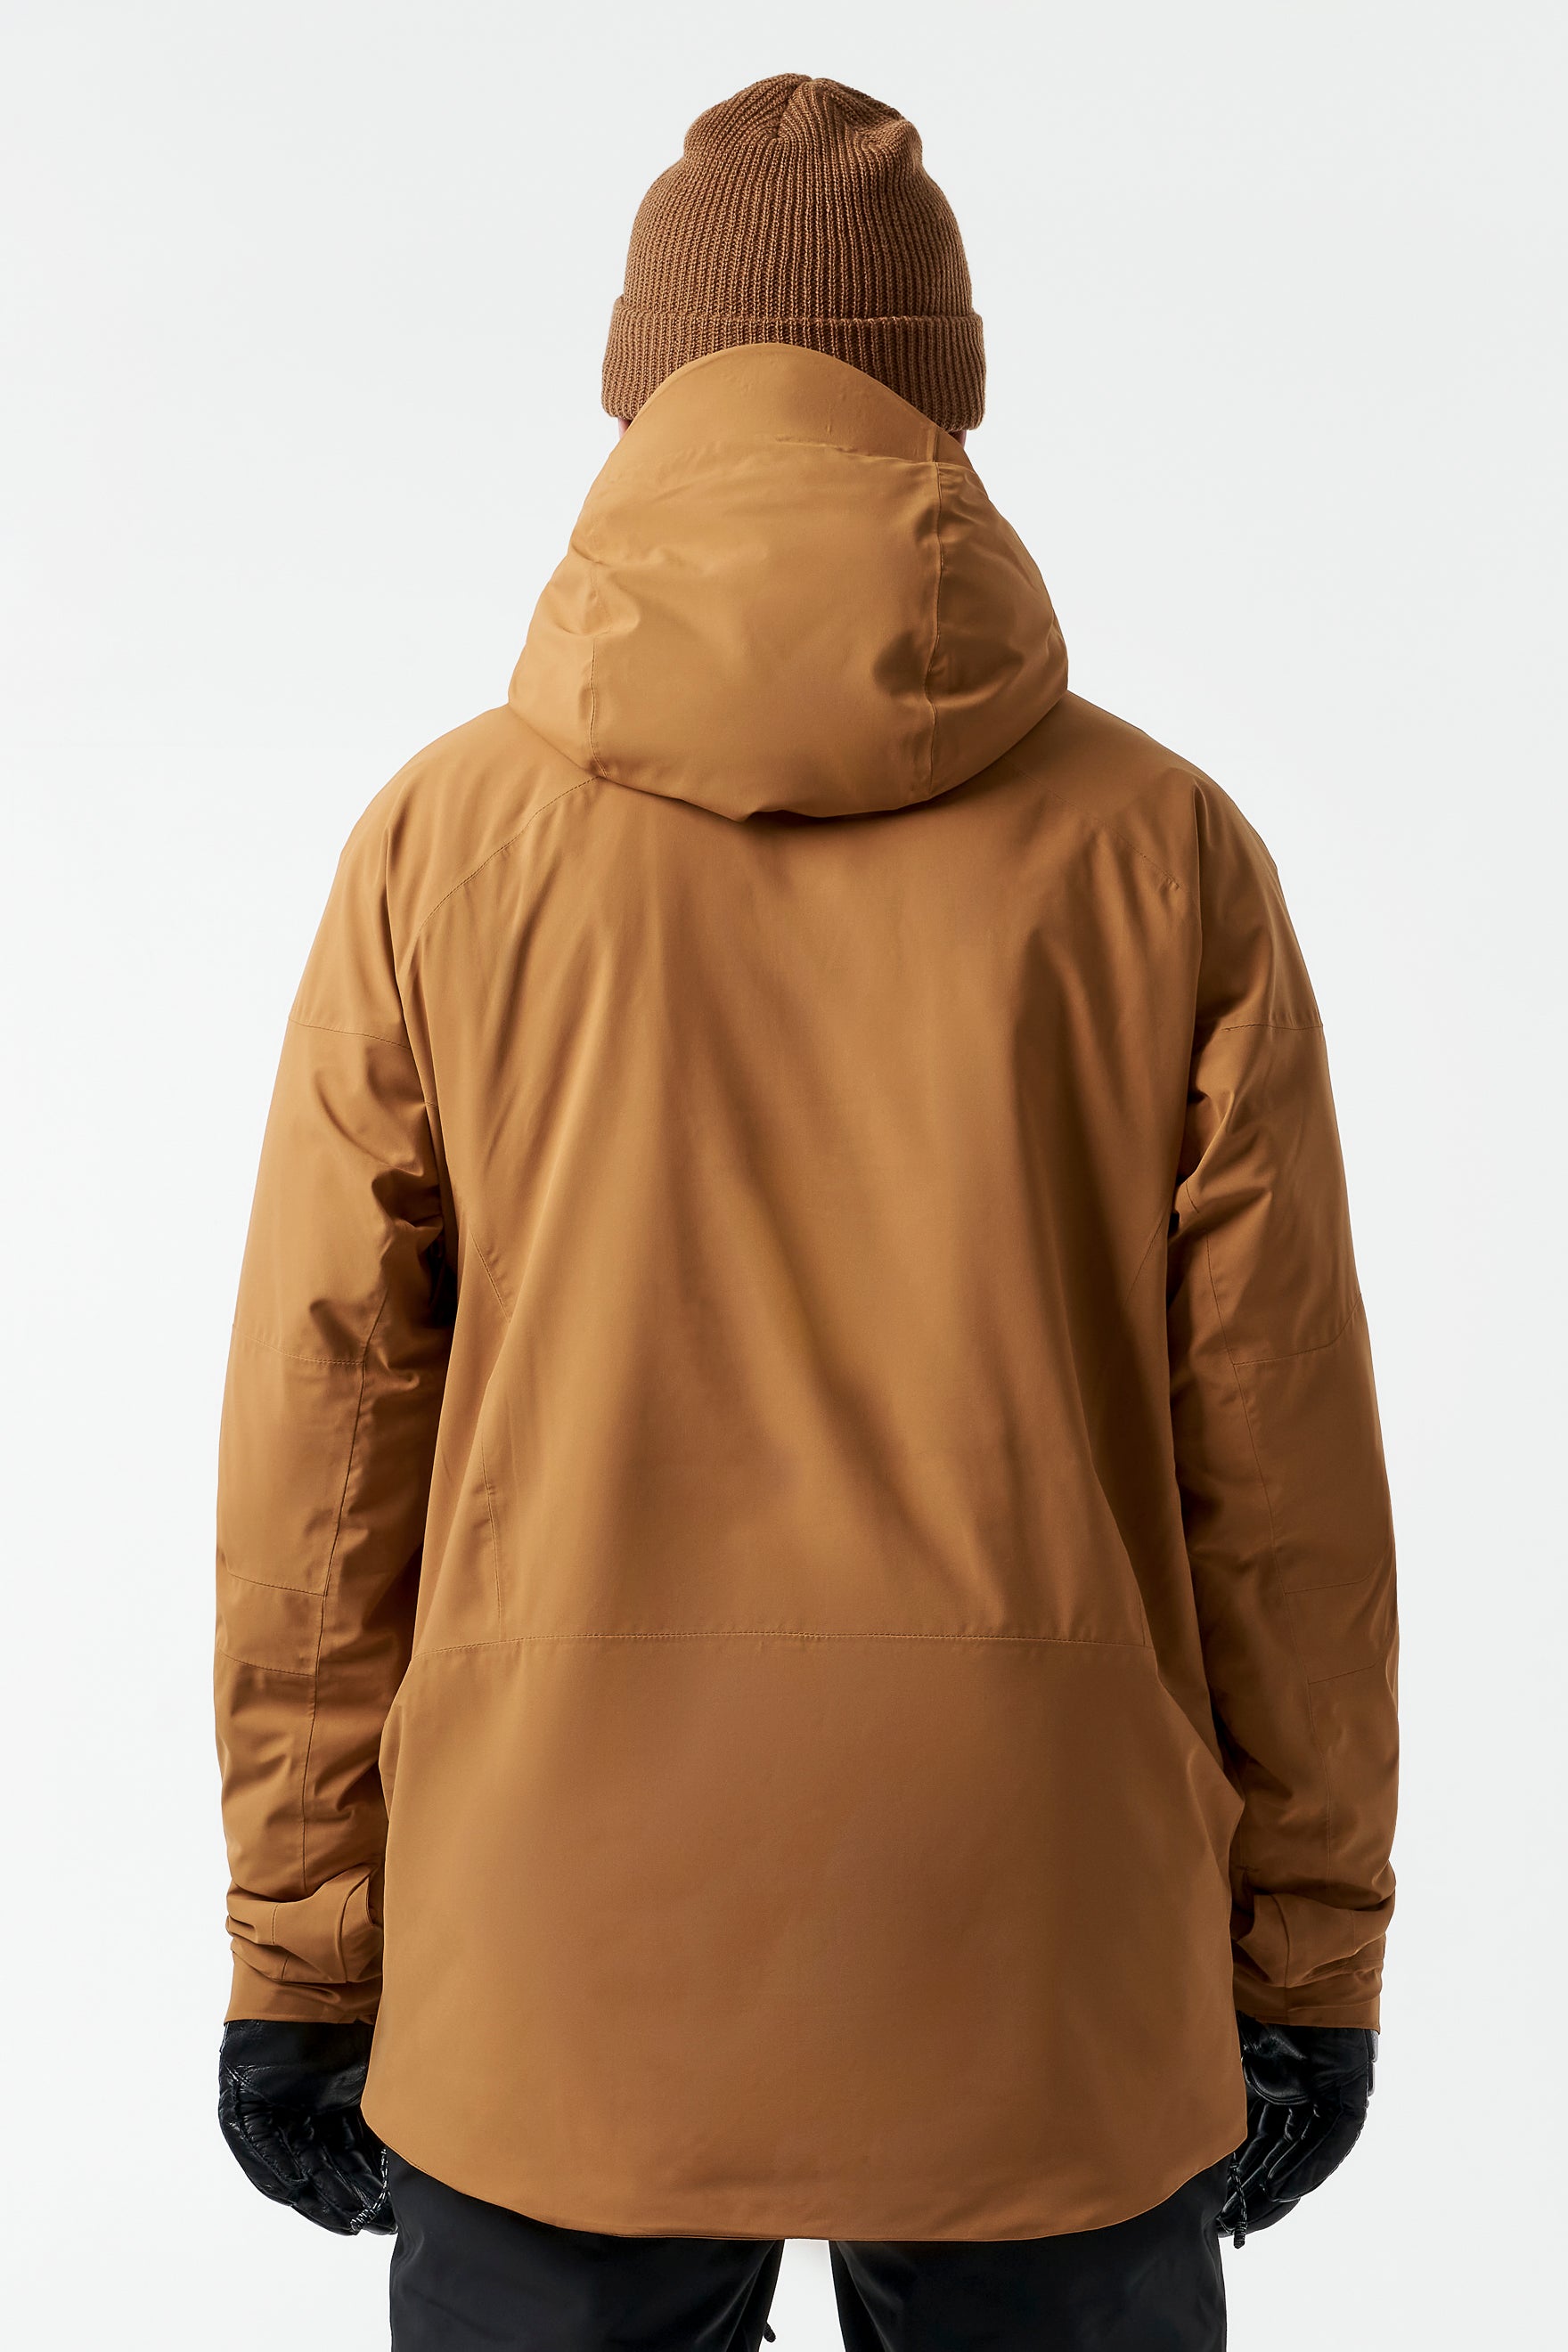 Alaskan hardgear hoodie mens - Gem